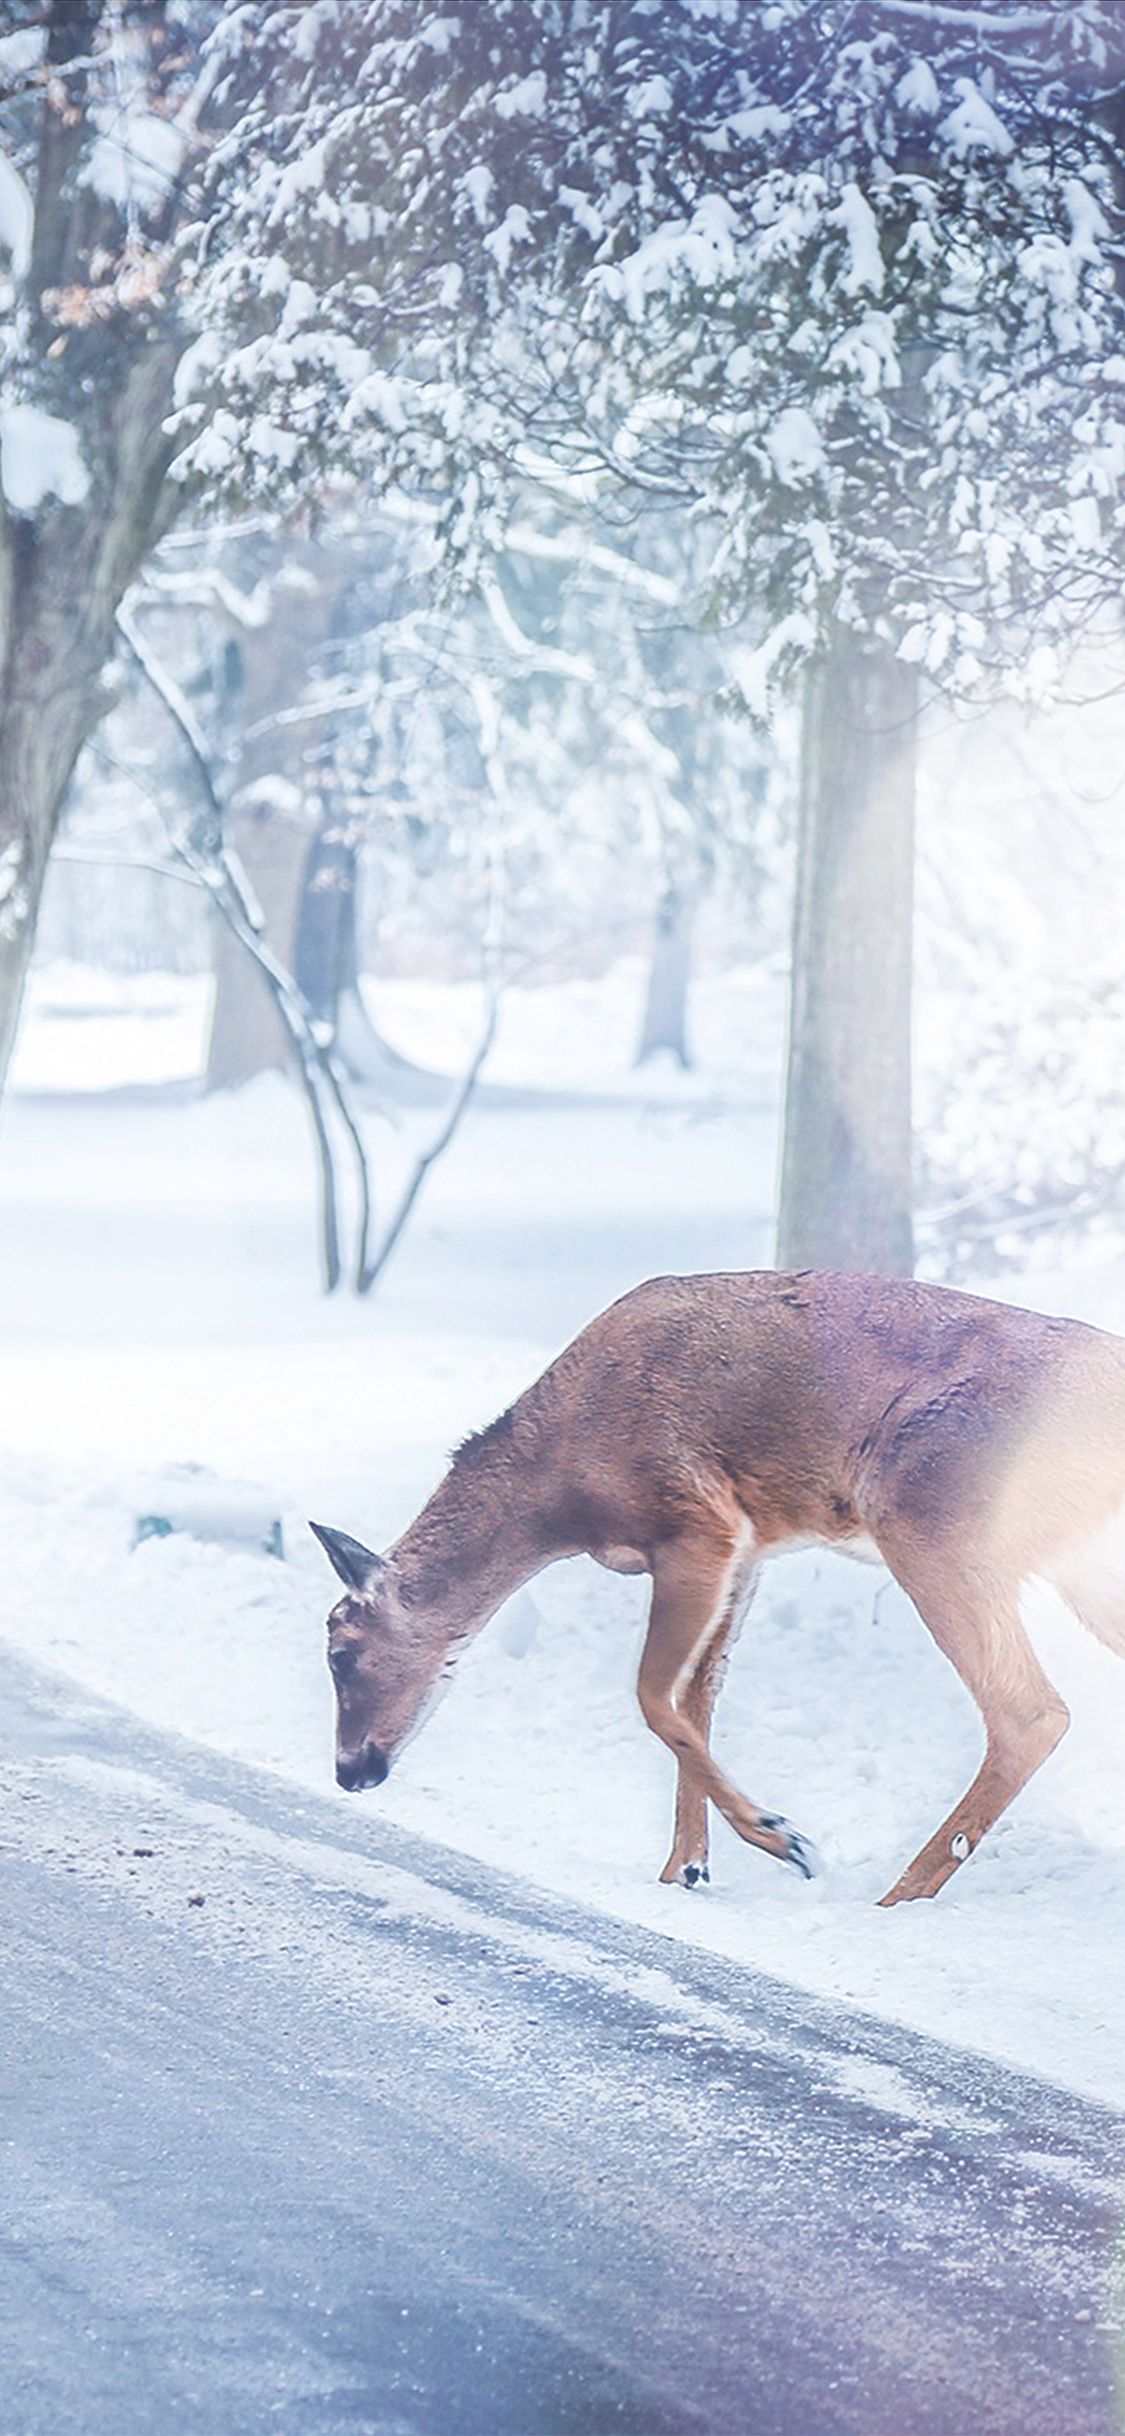 iPhone X wallpaper. christmas deer street snow winter nature animal white